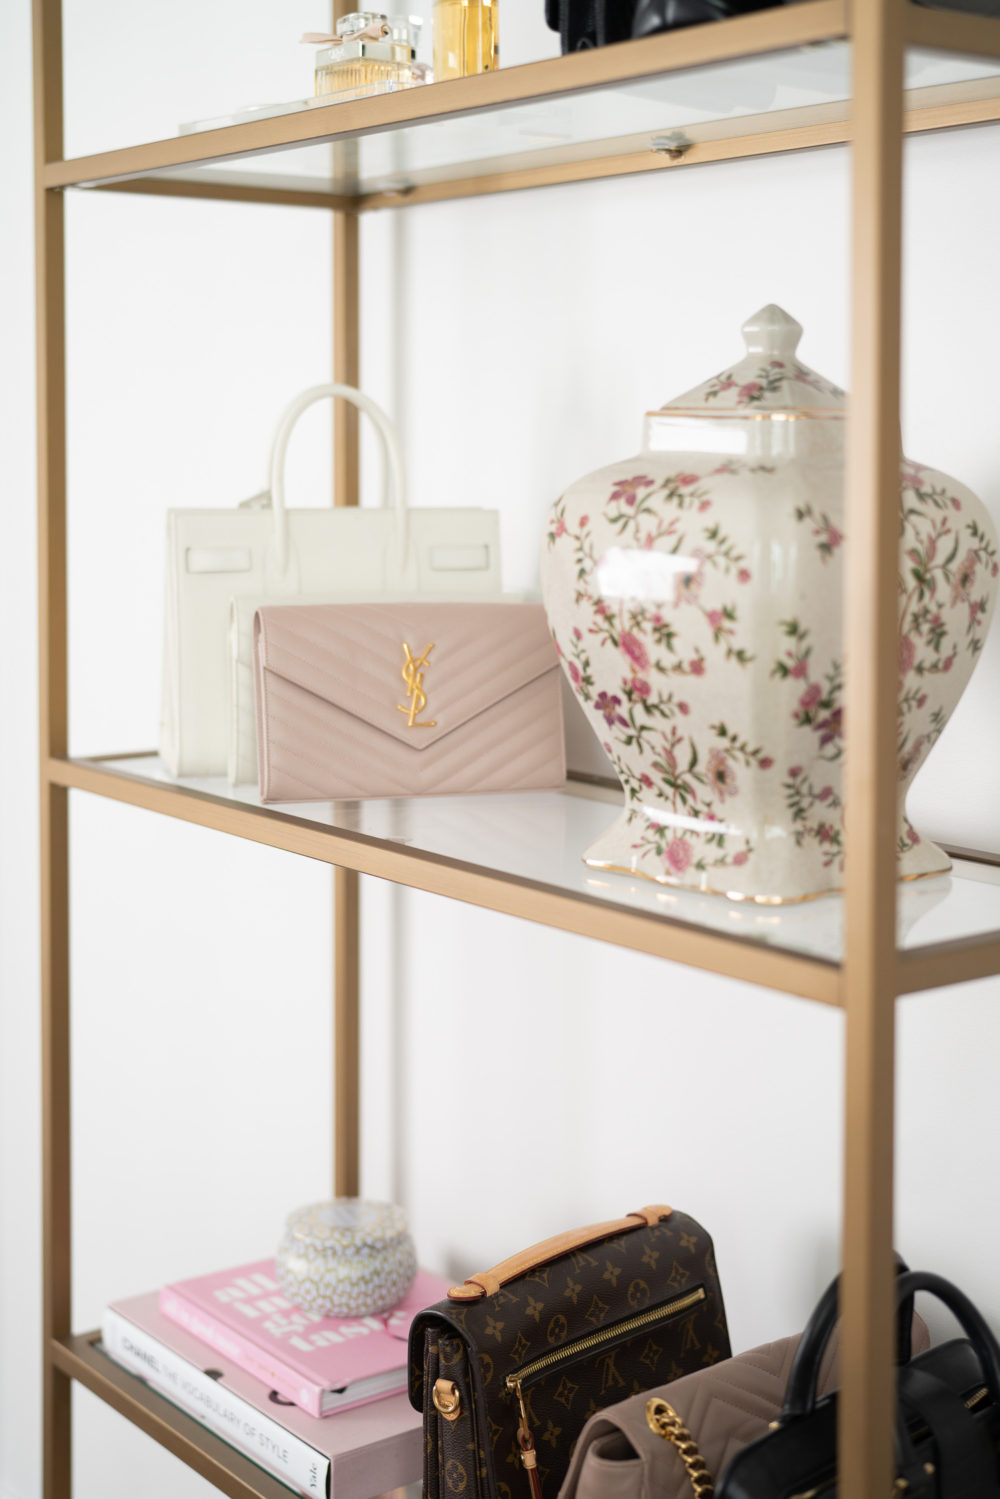 Petite Fashion Blog | designer bags on eBay | eBay luxury bags